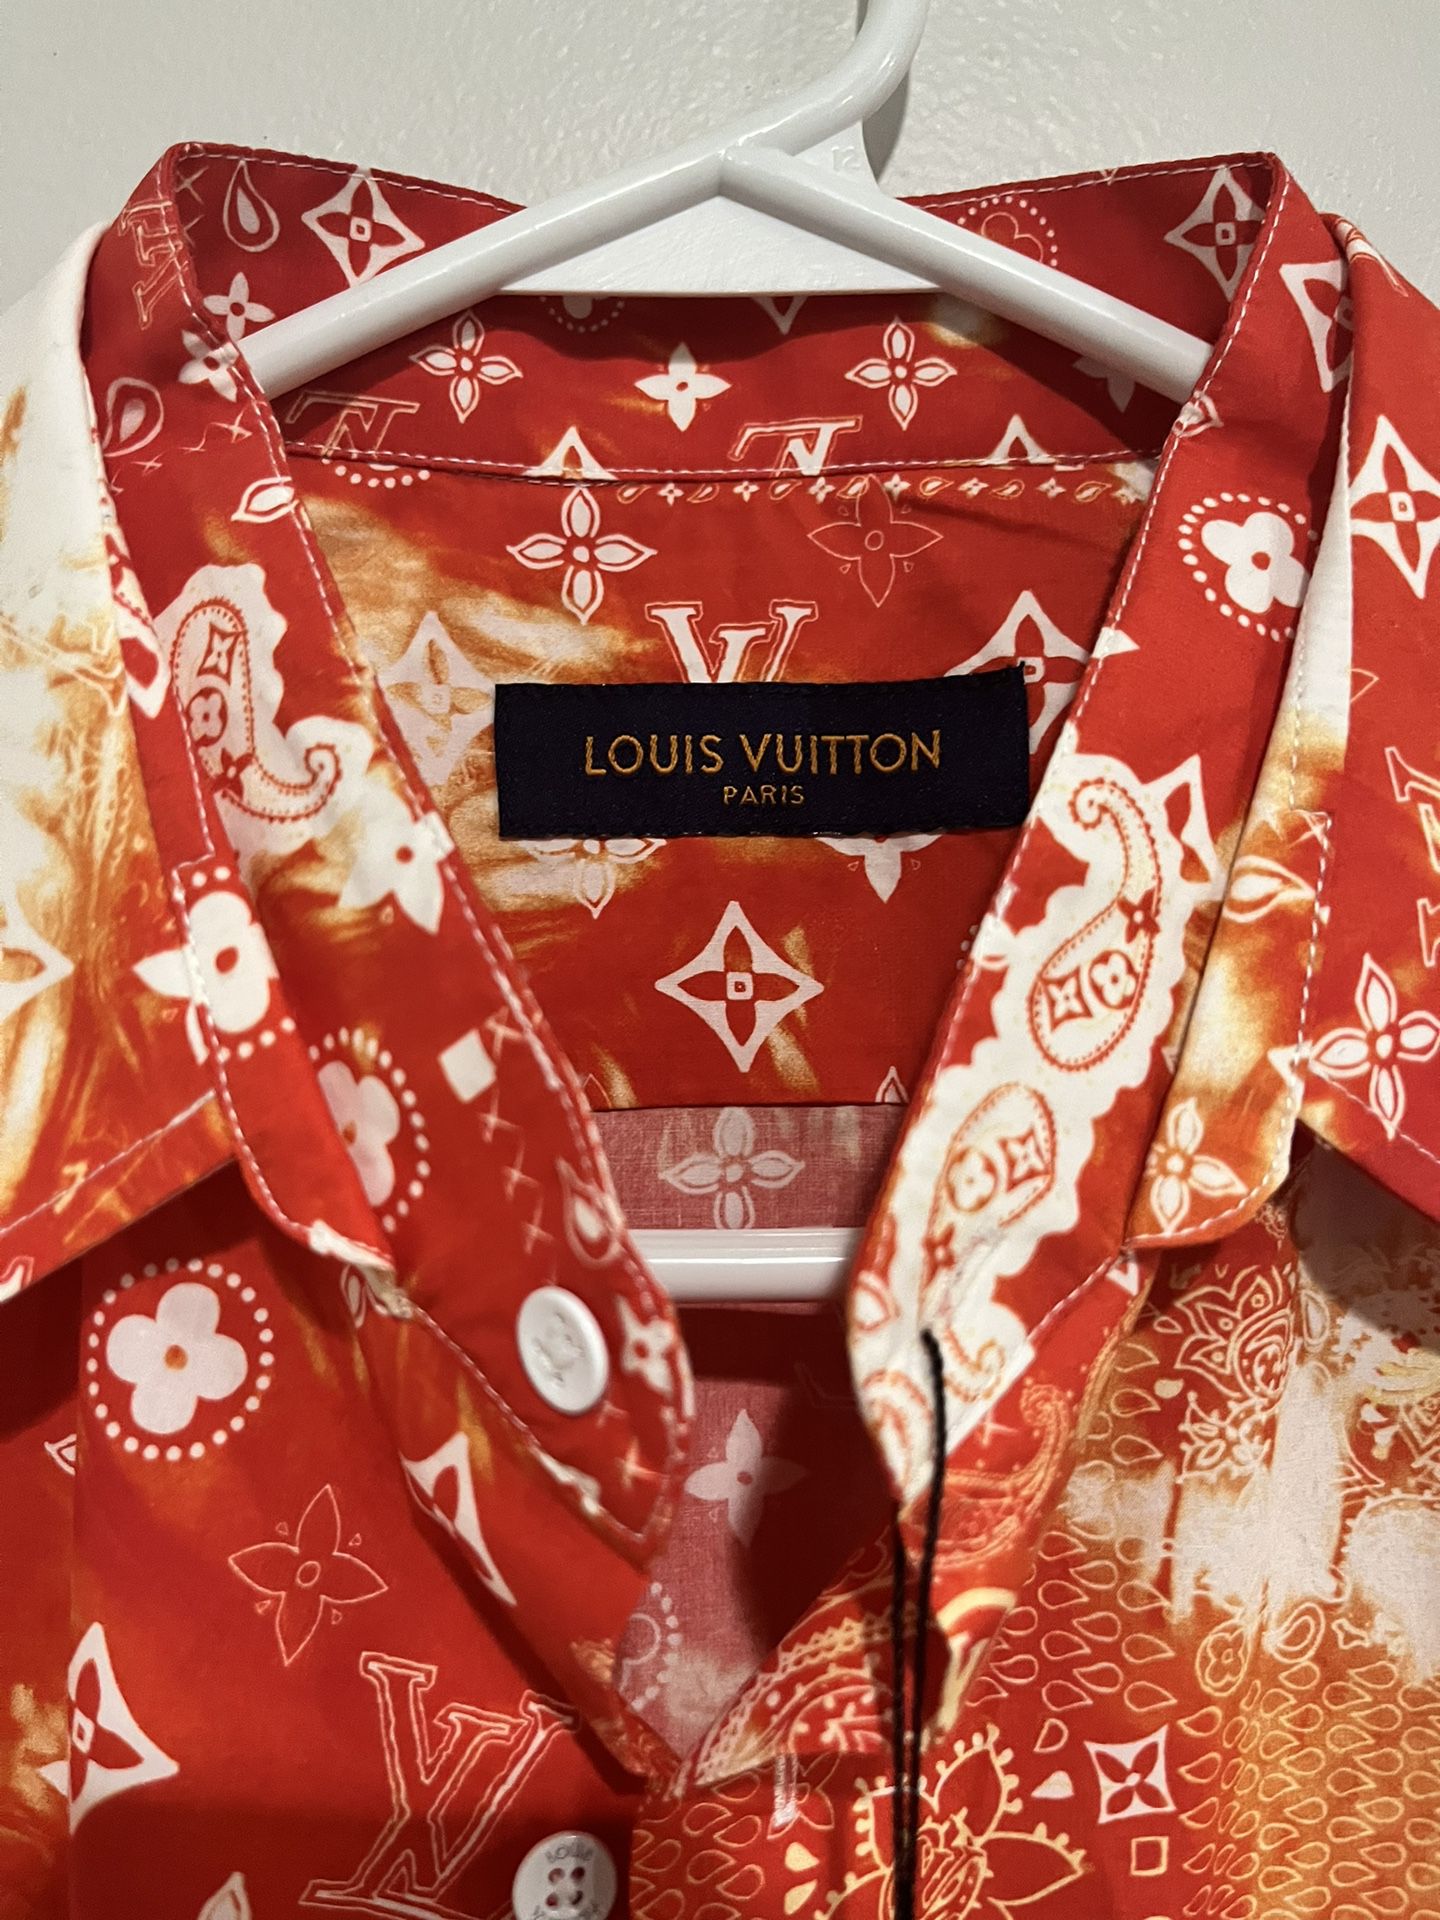 Louis Vuitton Monogram Bandana Short-sleeved Shirt